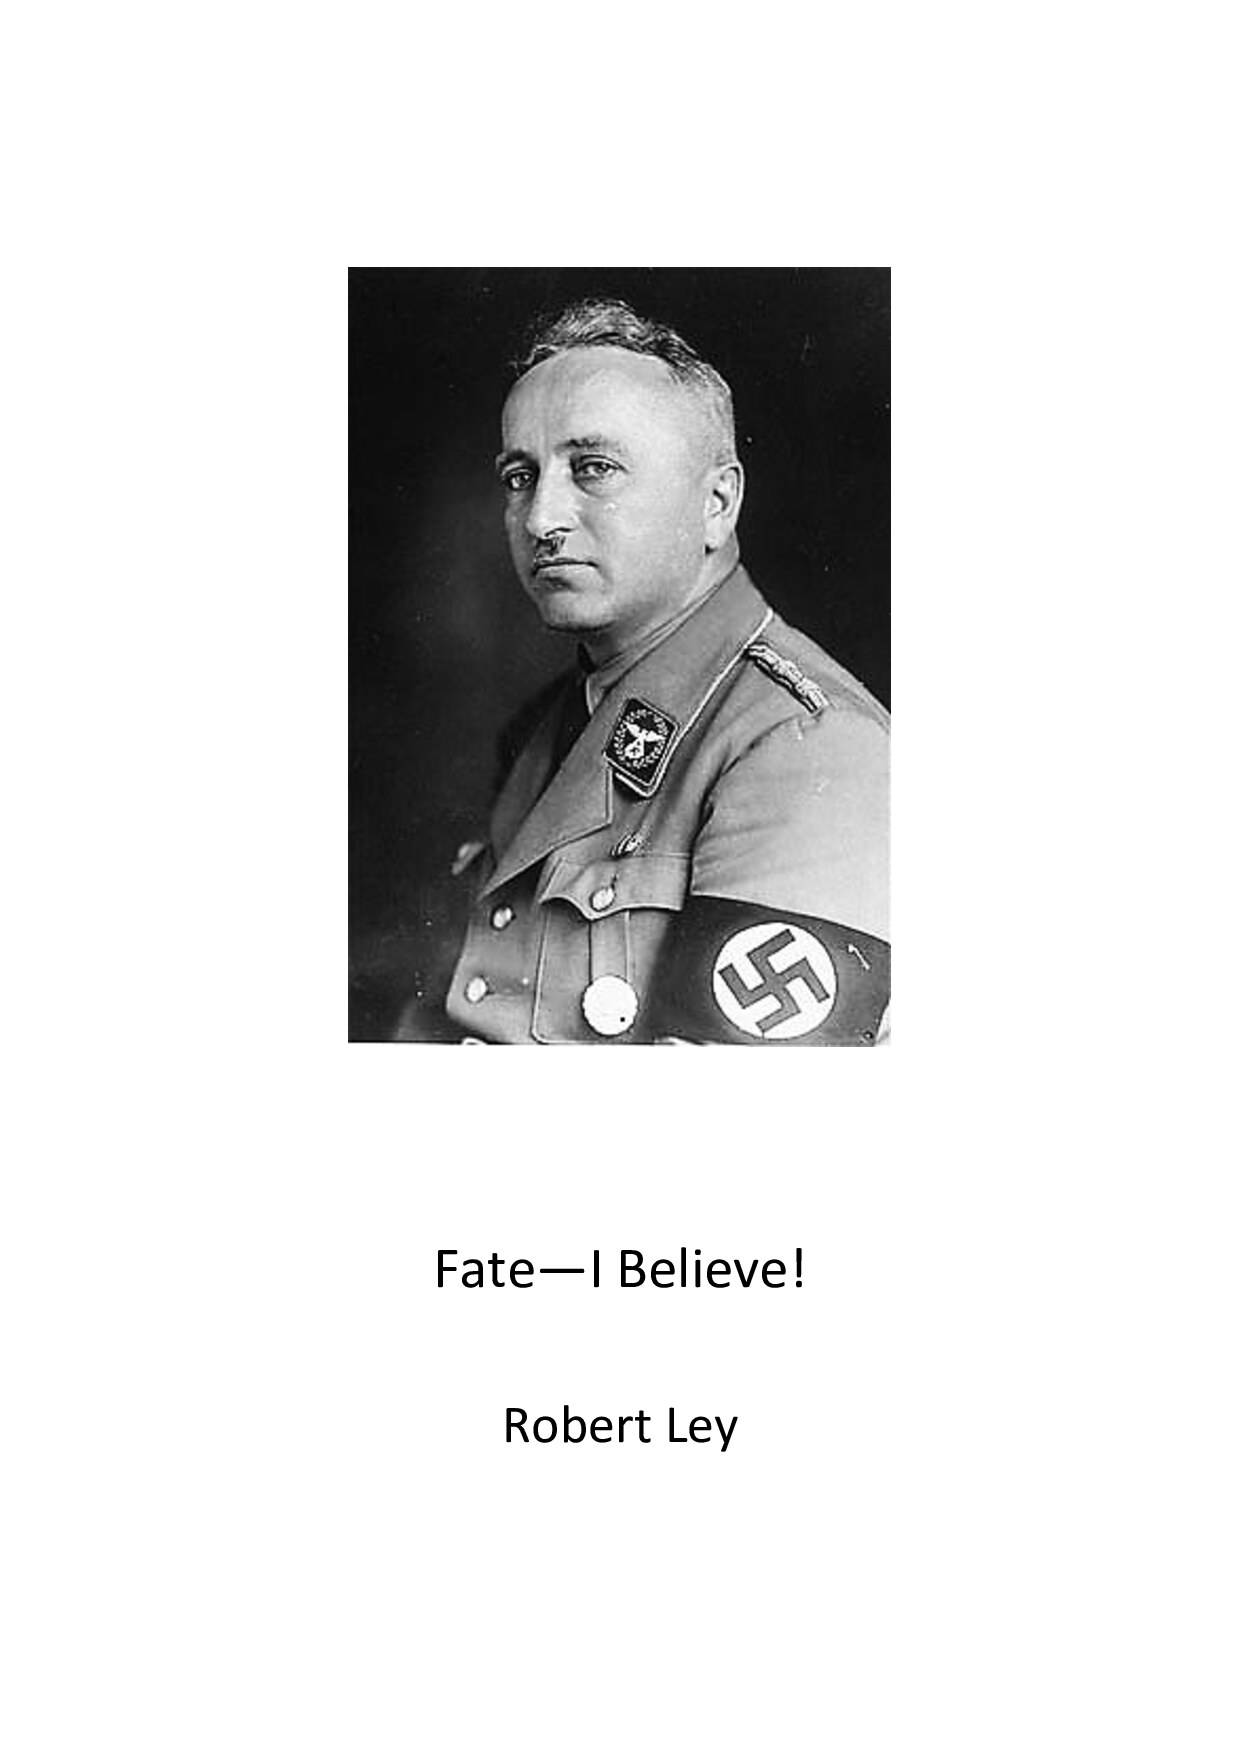 Ley, Robert; Fate - I Believe!